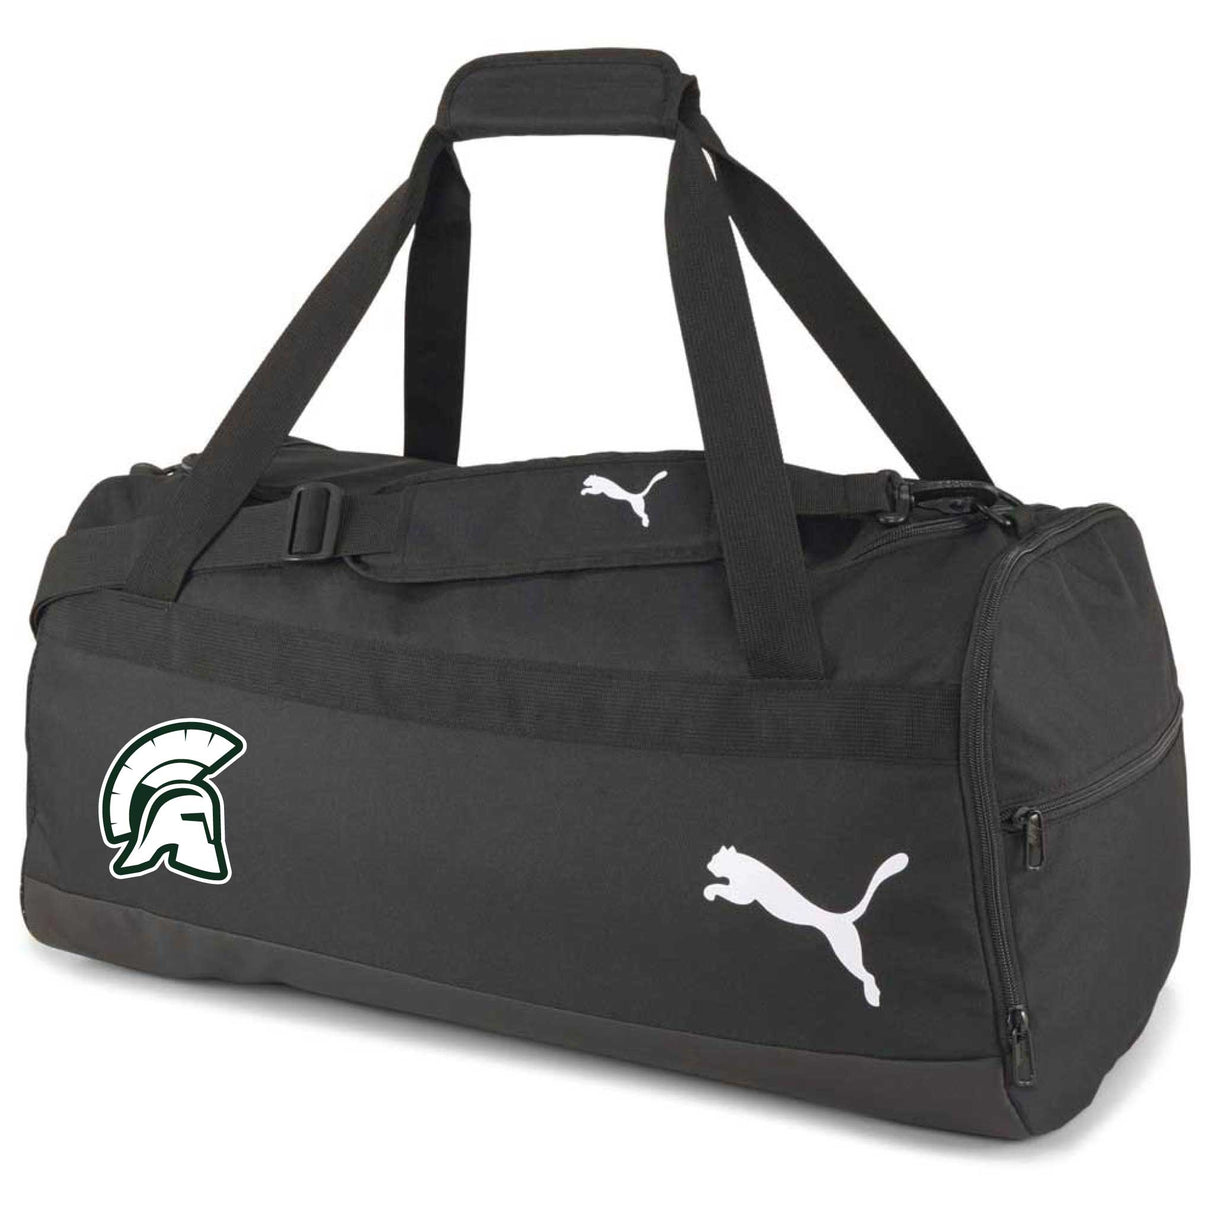 L'Arbrisseau School Spartan Sports Bag